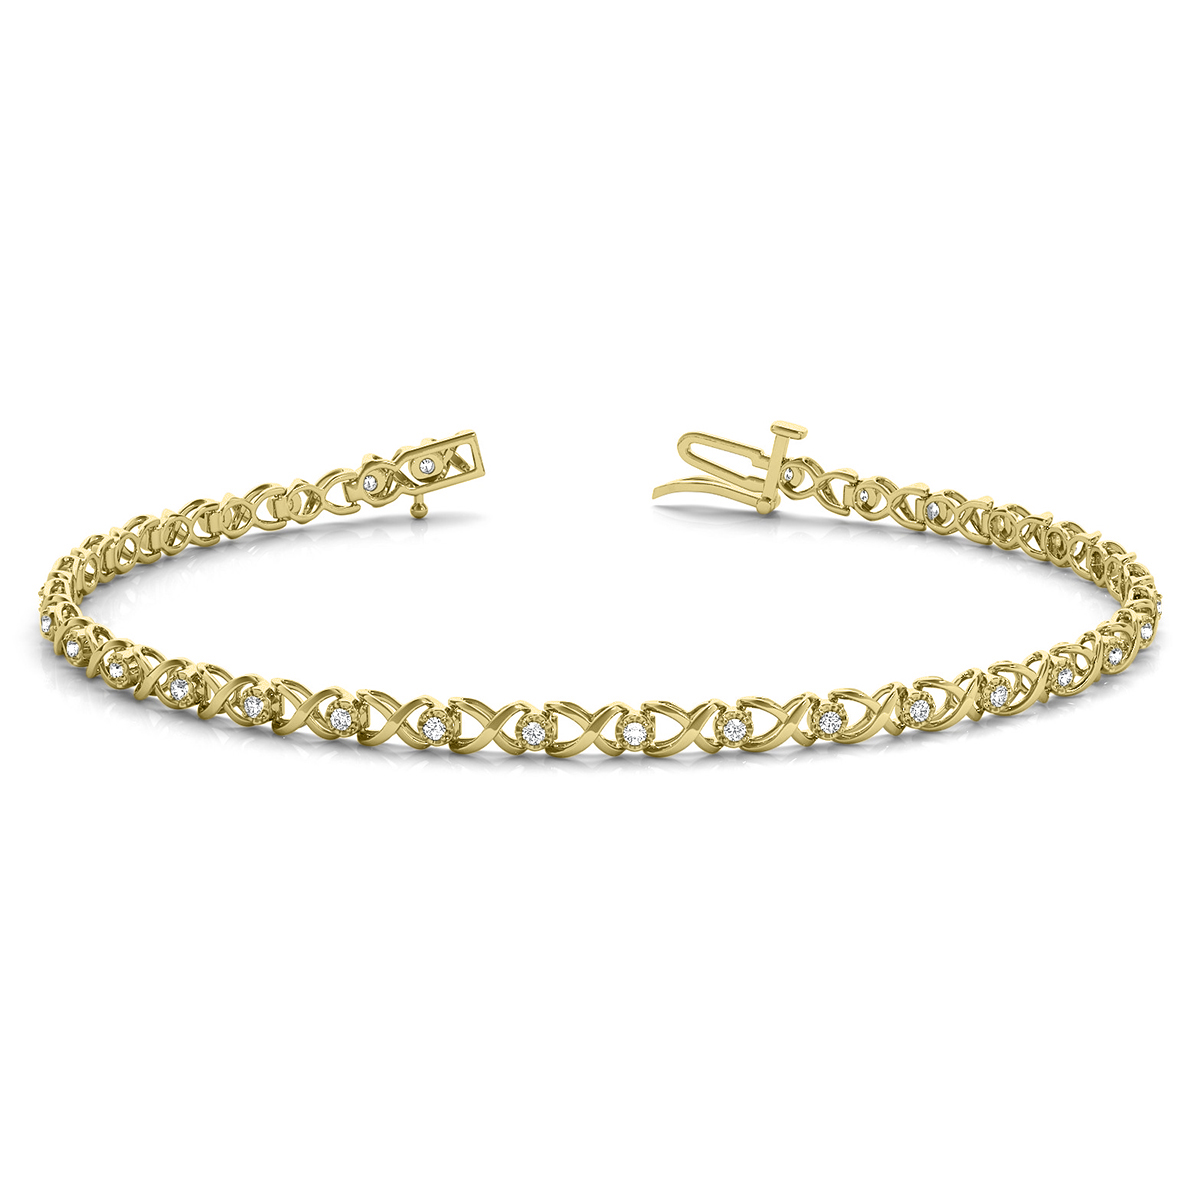 1/4 Carat TW Hugs and Kisses Diamond Bracelet in 10K Yellow Gold